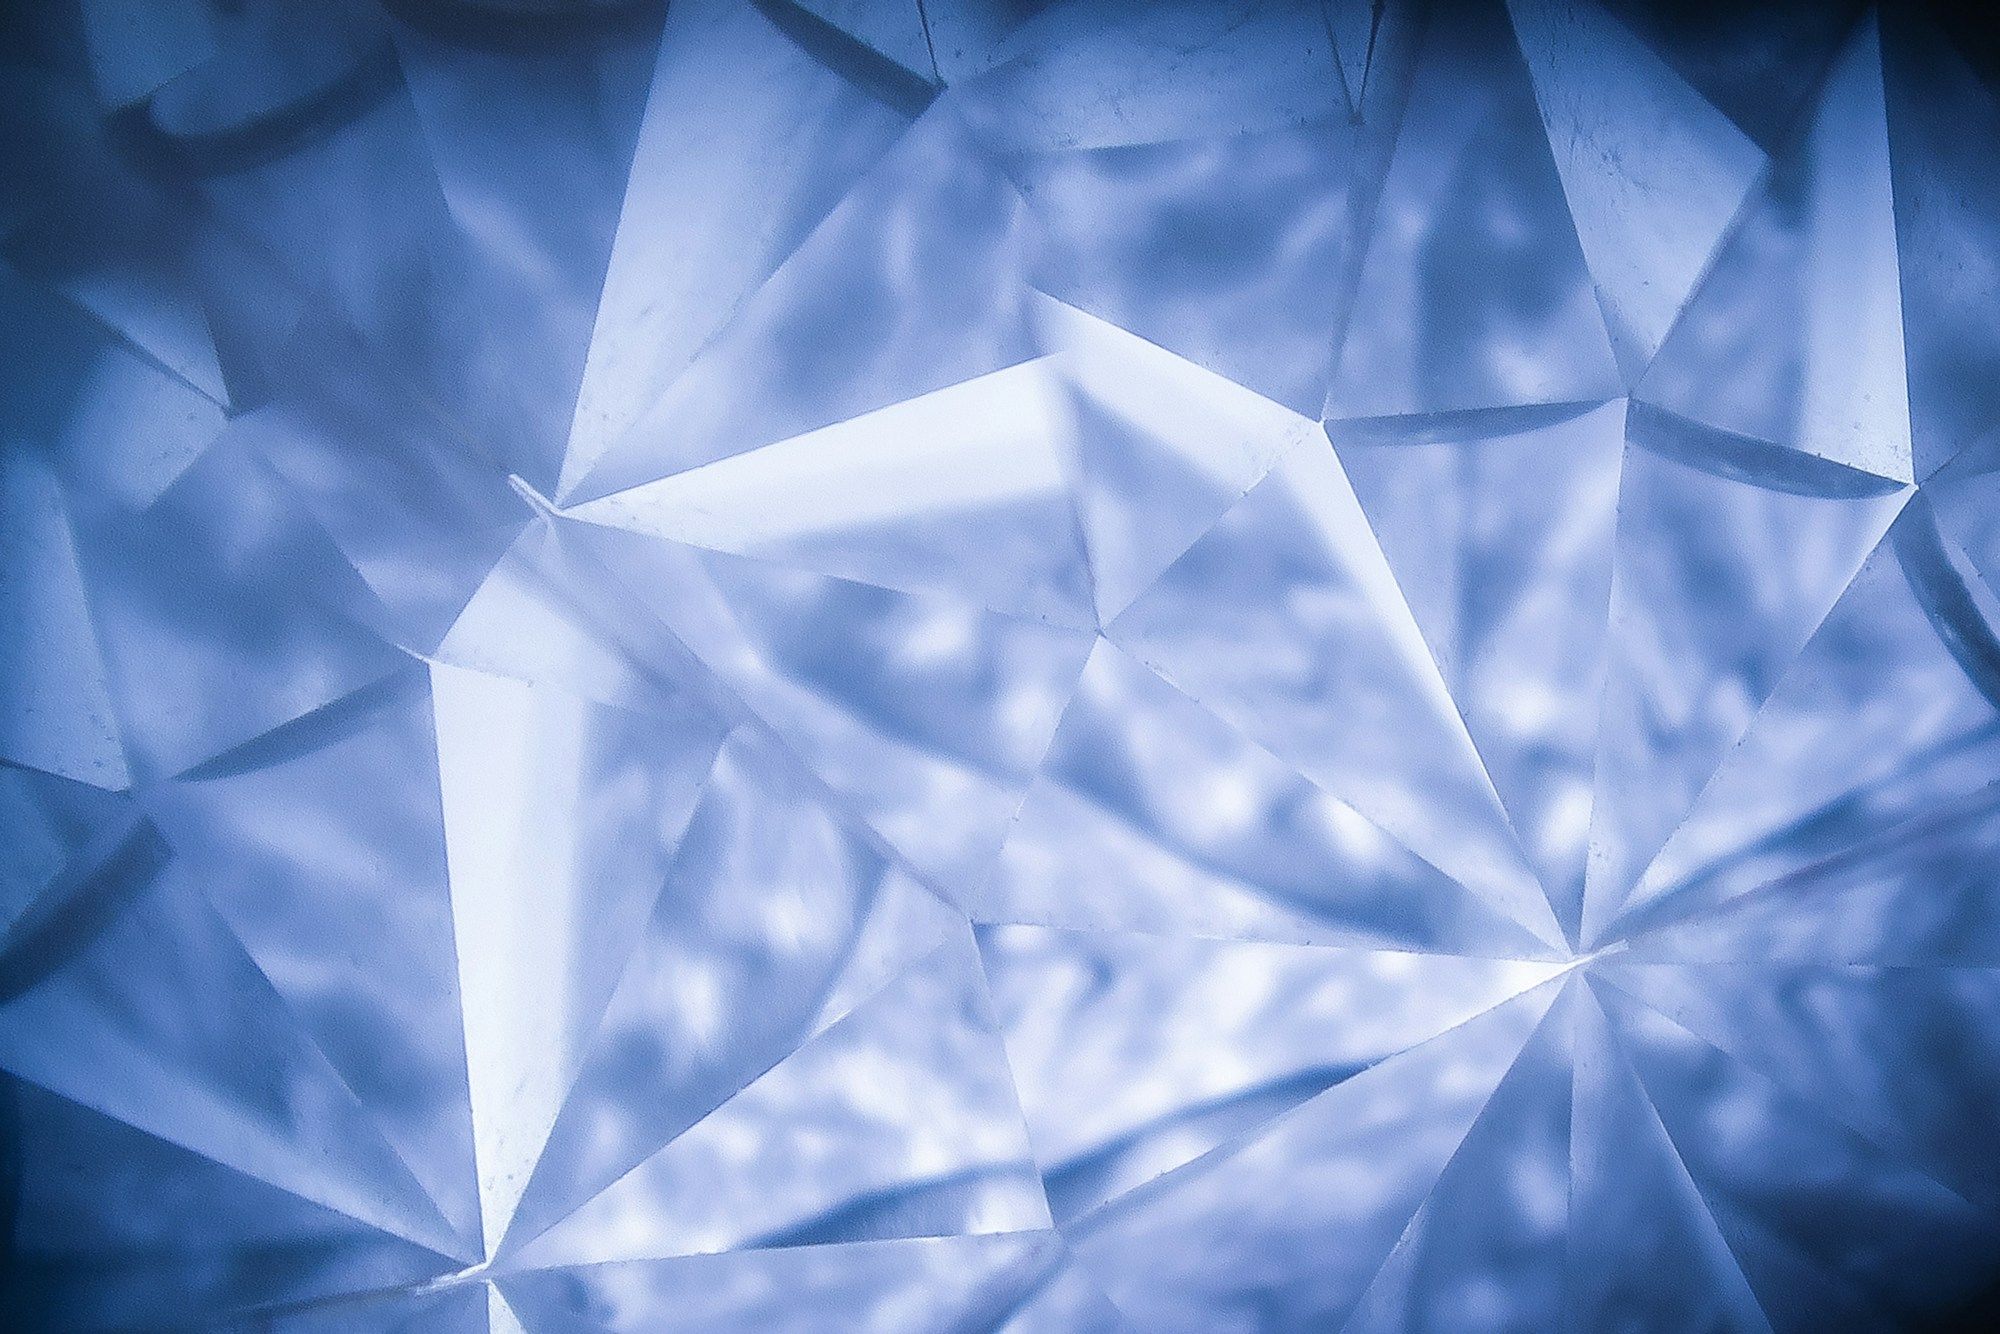 Lab Grown diamonds V Natural Diamonds